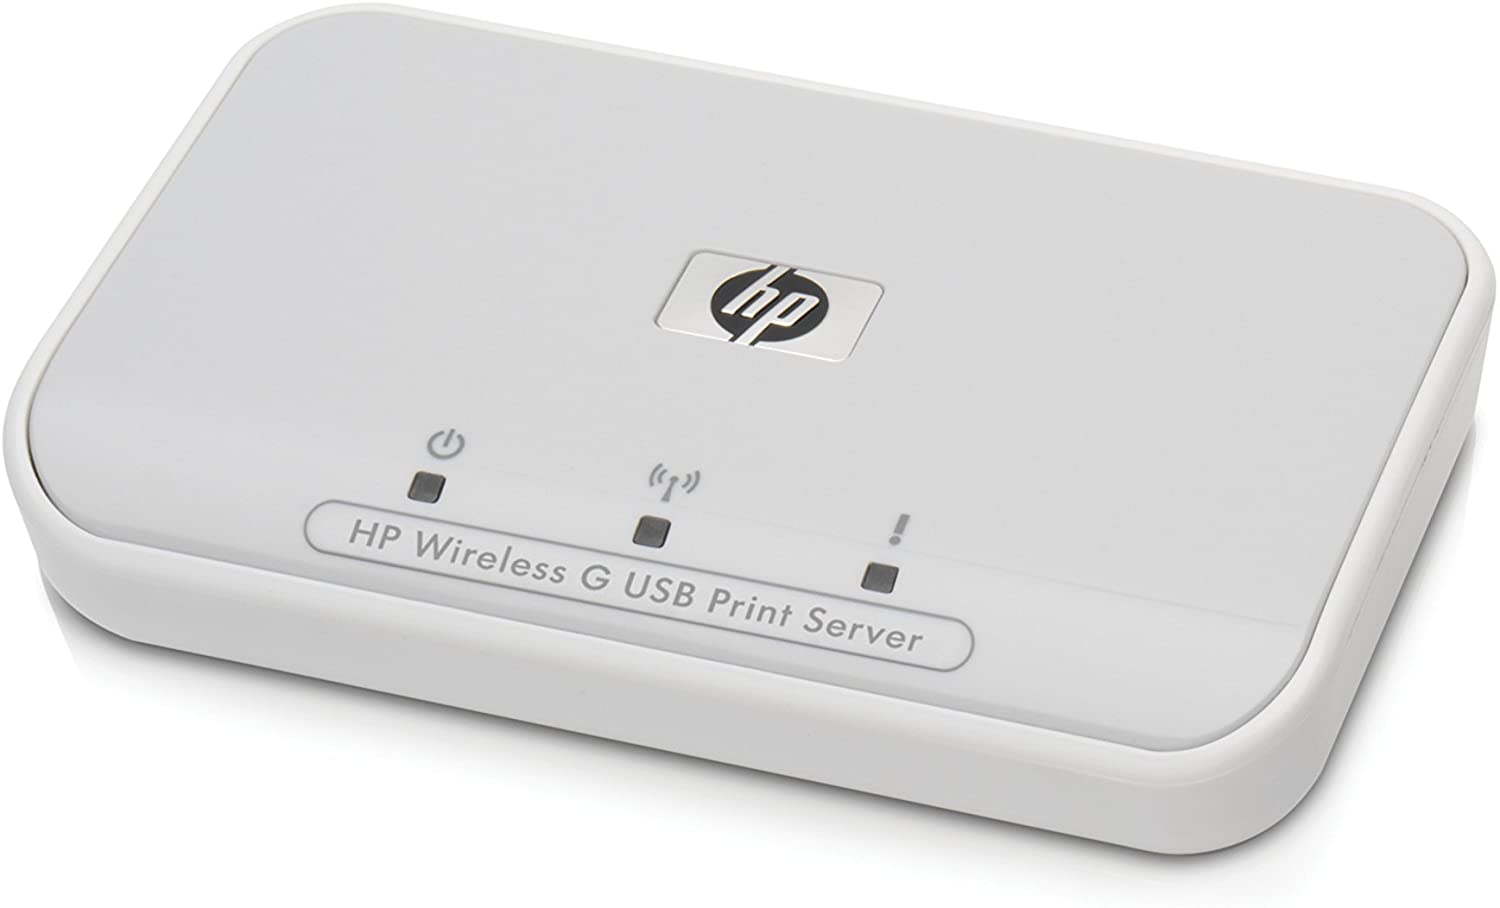 hp handheld g usb print server mac